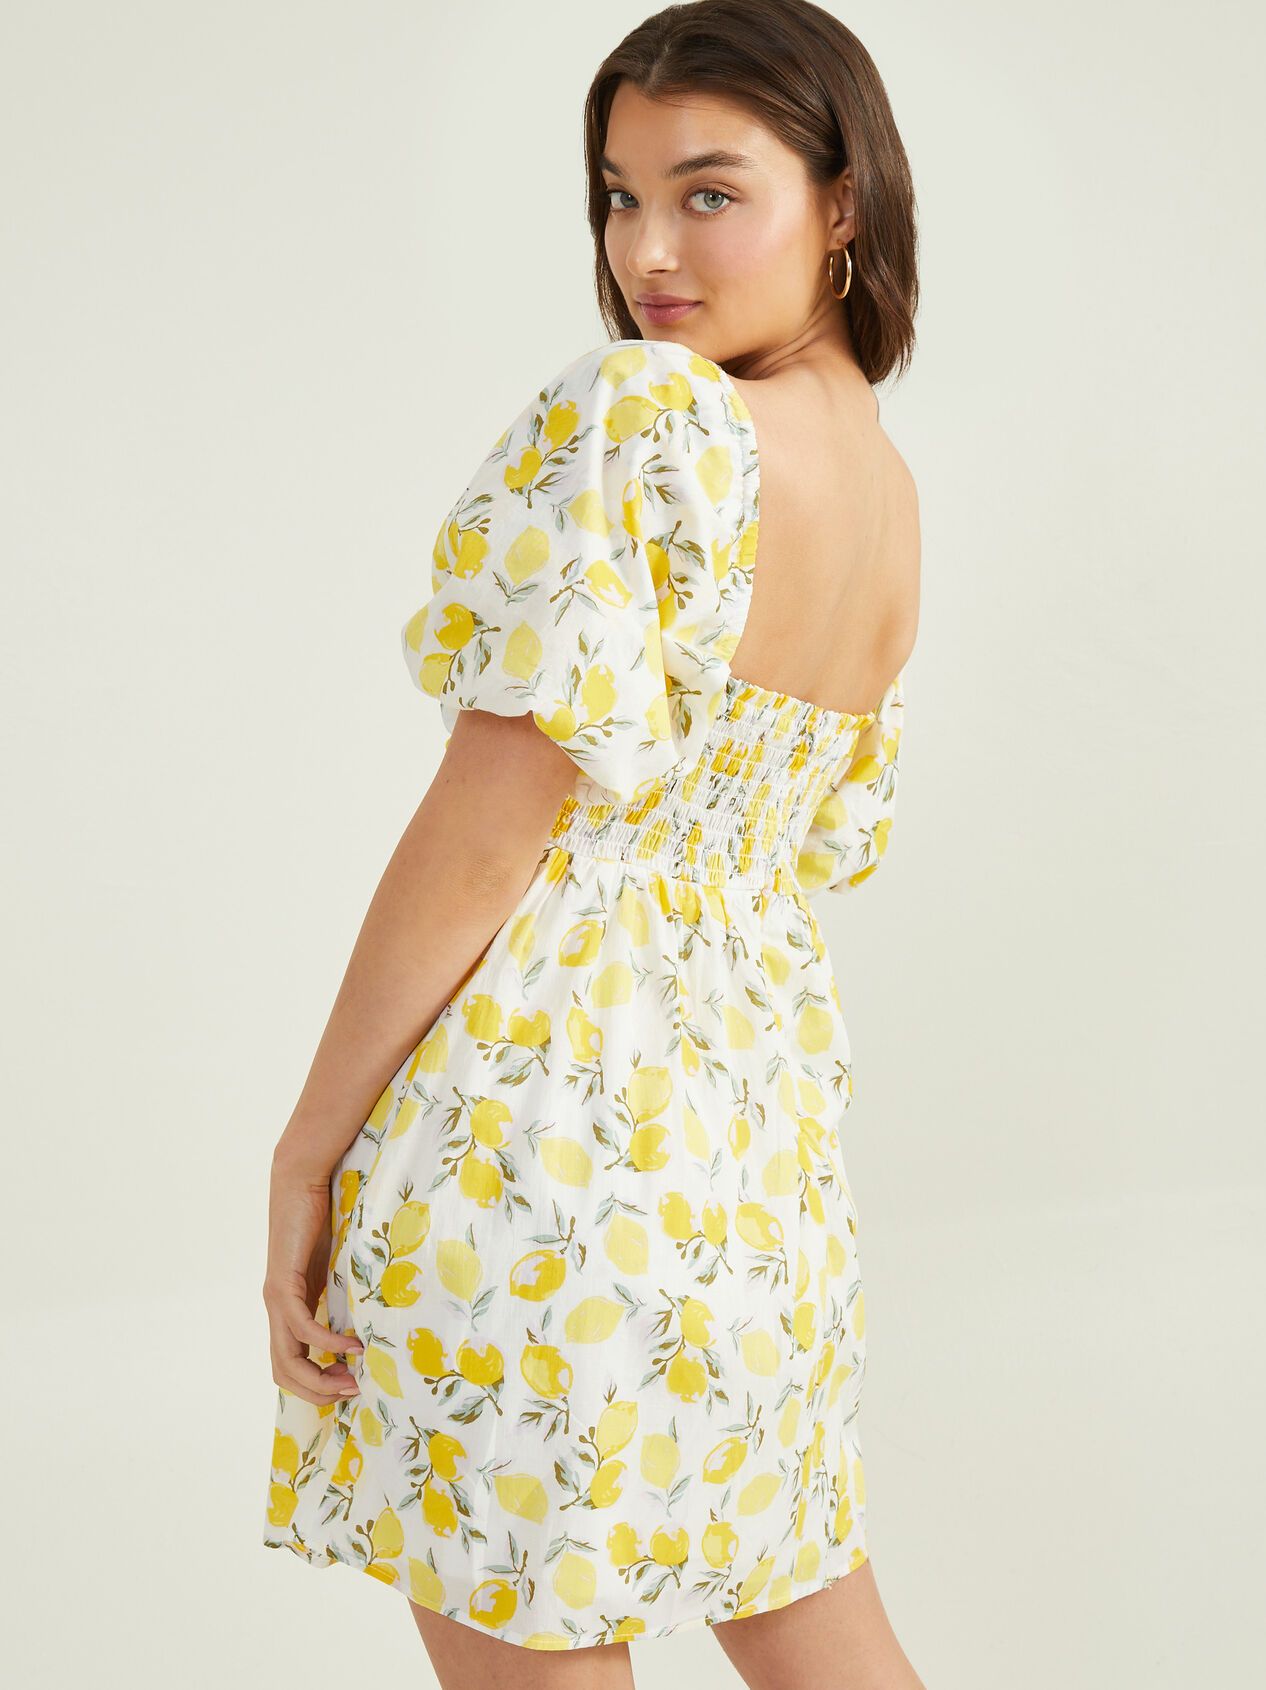 Lemon Printed Dress | Altar'd State